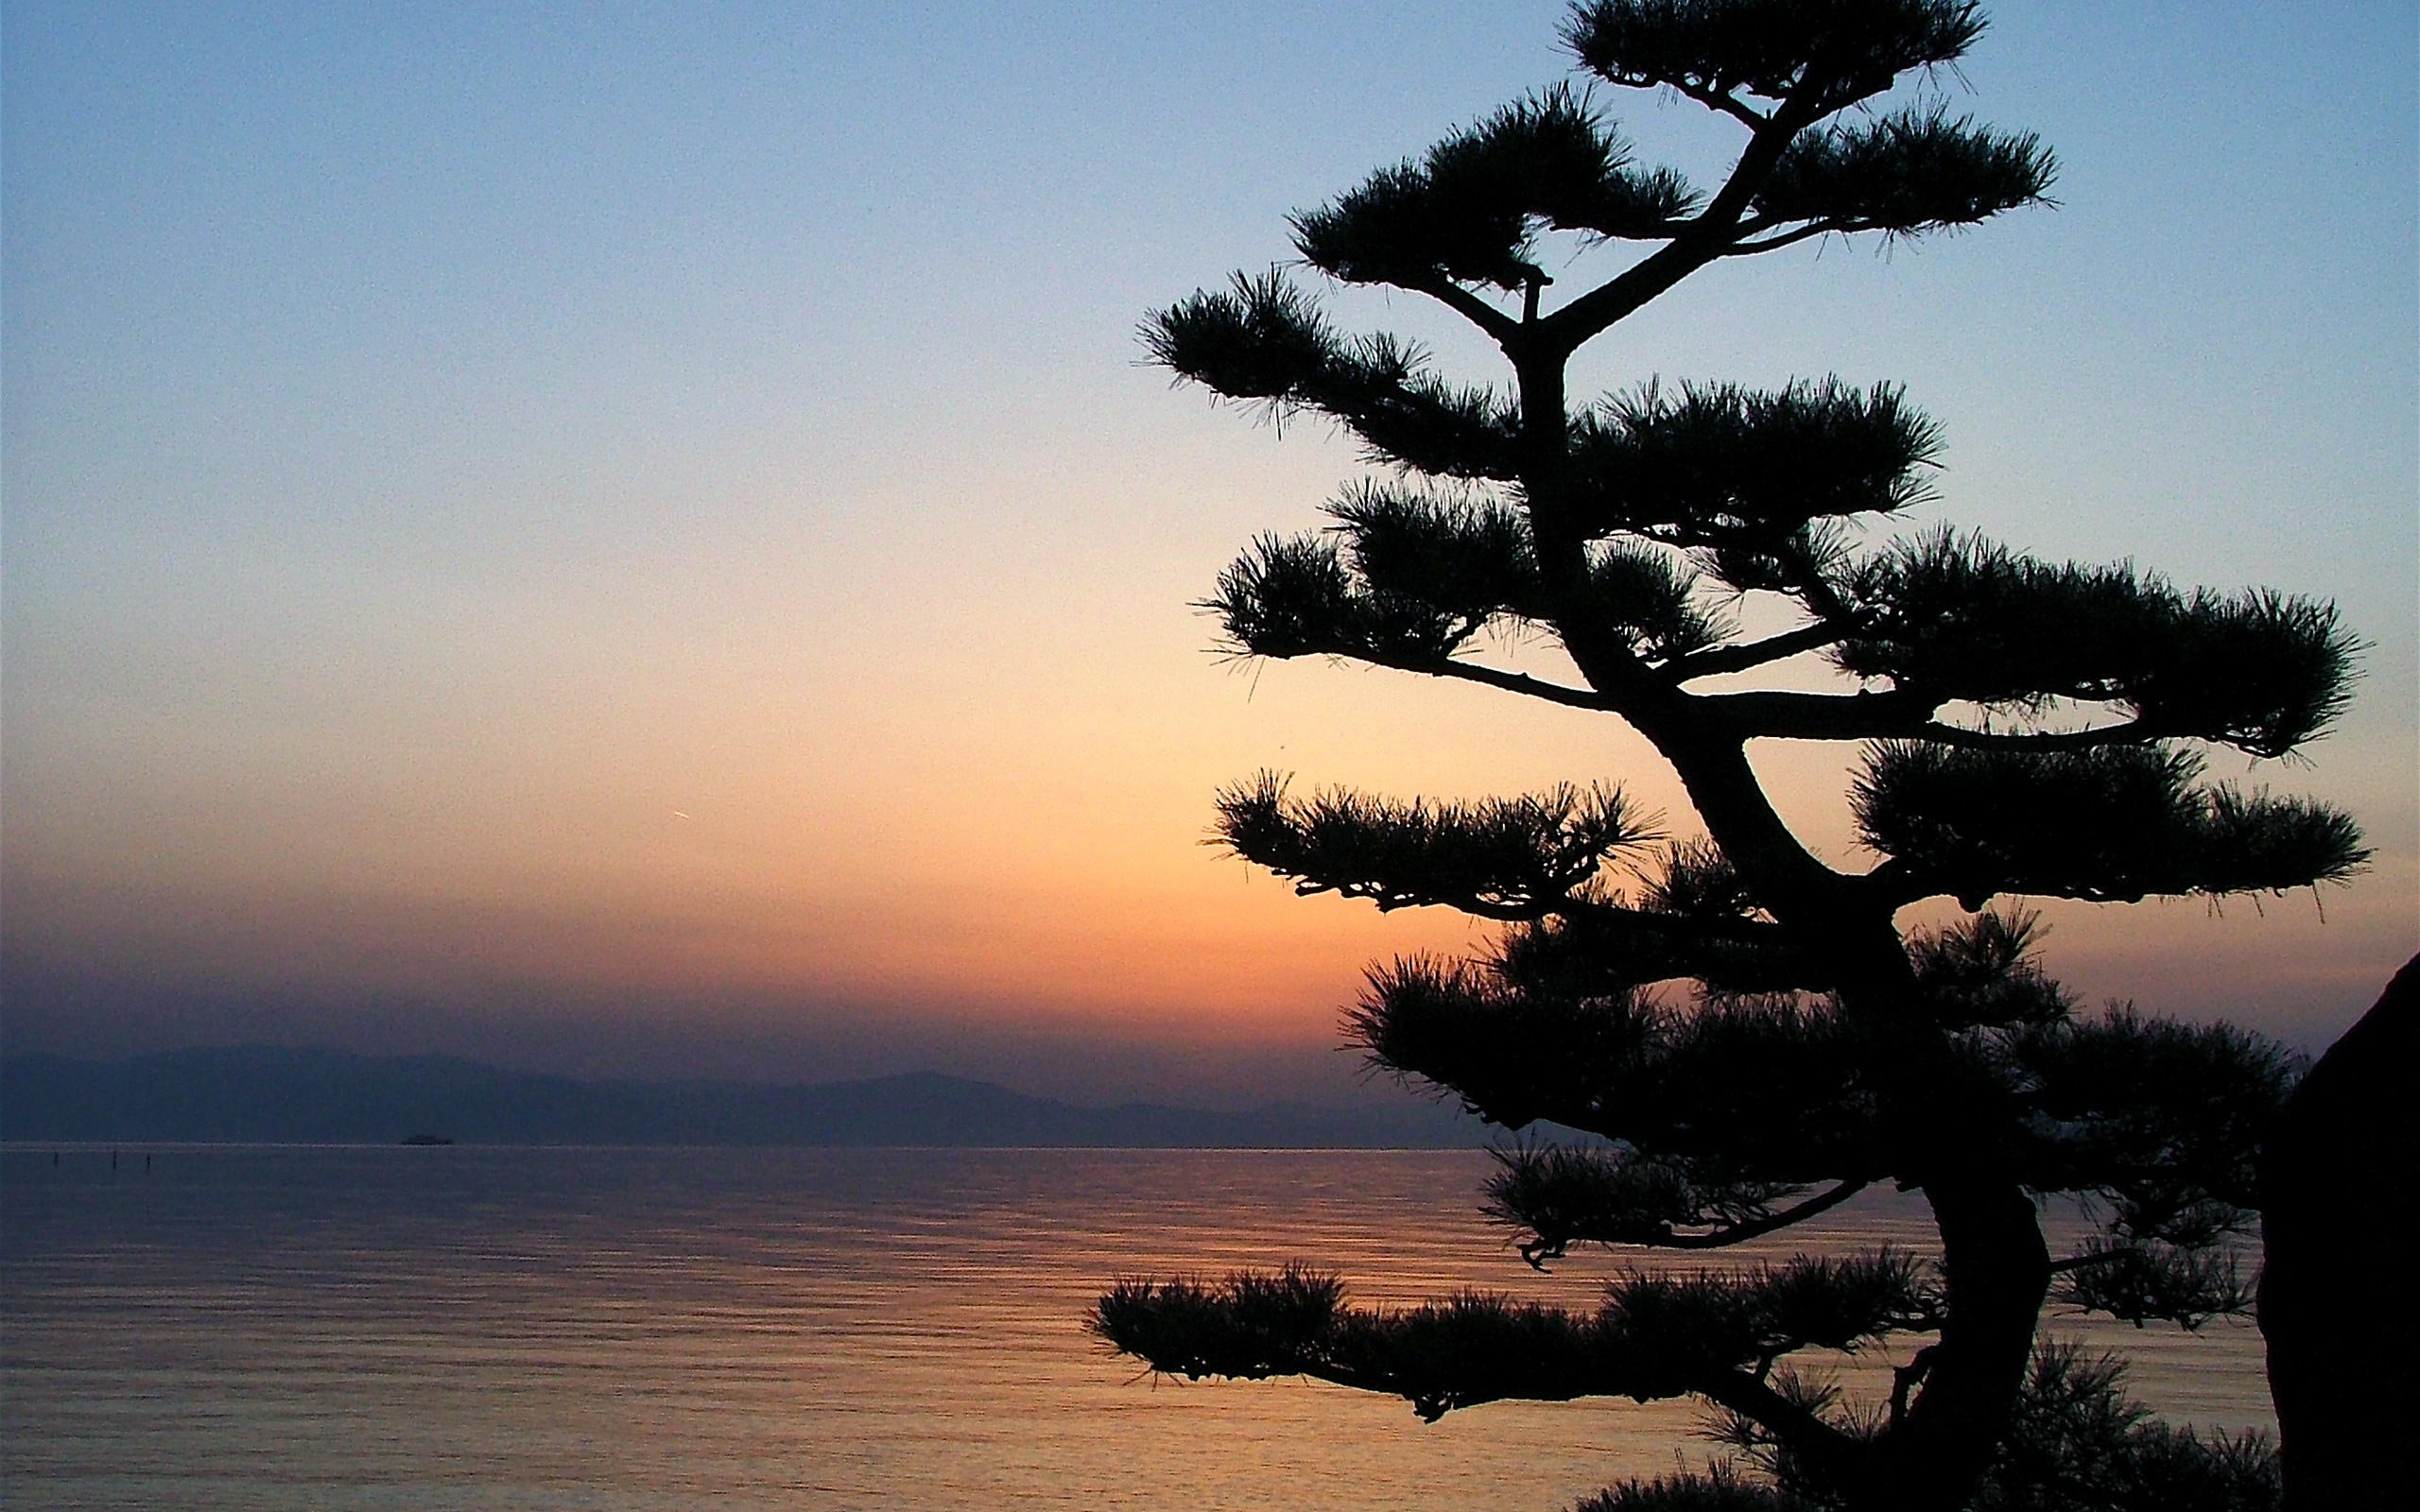 sunset, Japan, landscapes, nature, trees, silhouettes, lakes - desktop wallpaper